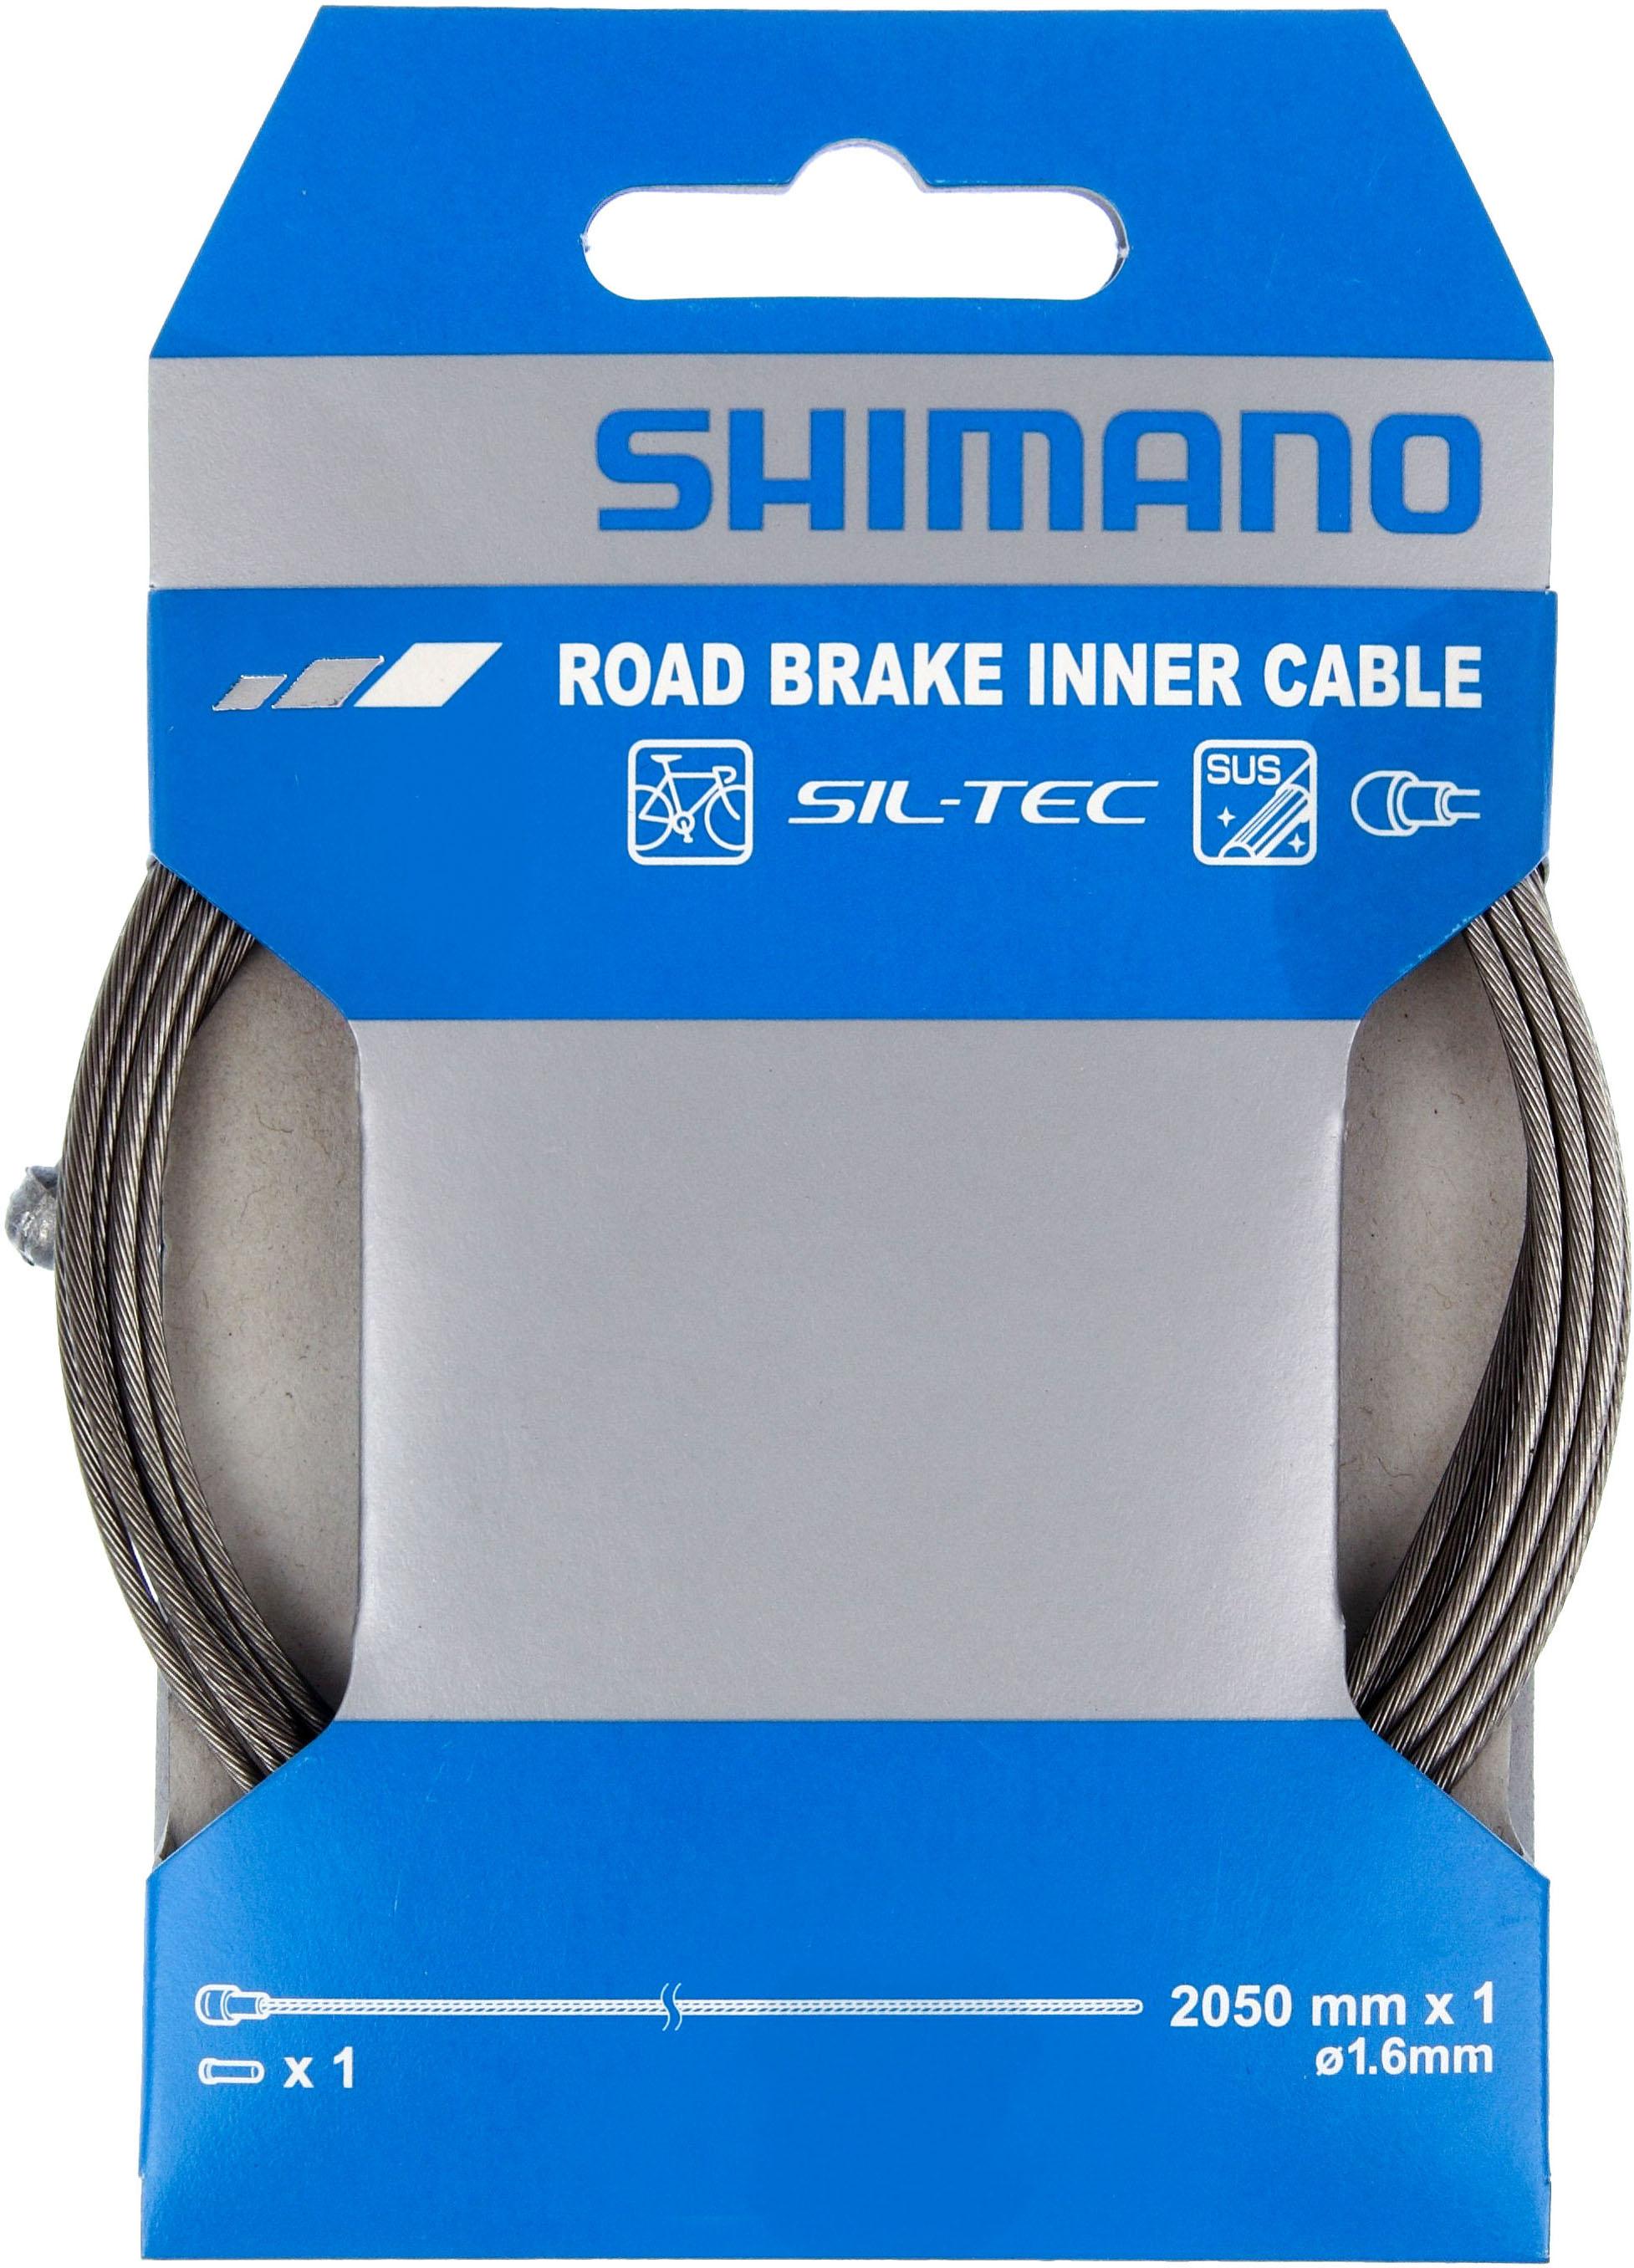 Shimano Sil-tec Road Brake Inner Cable - Silver